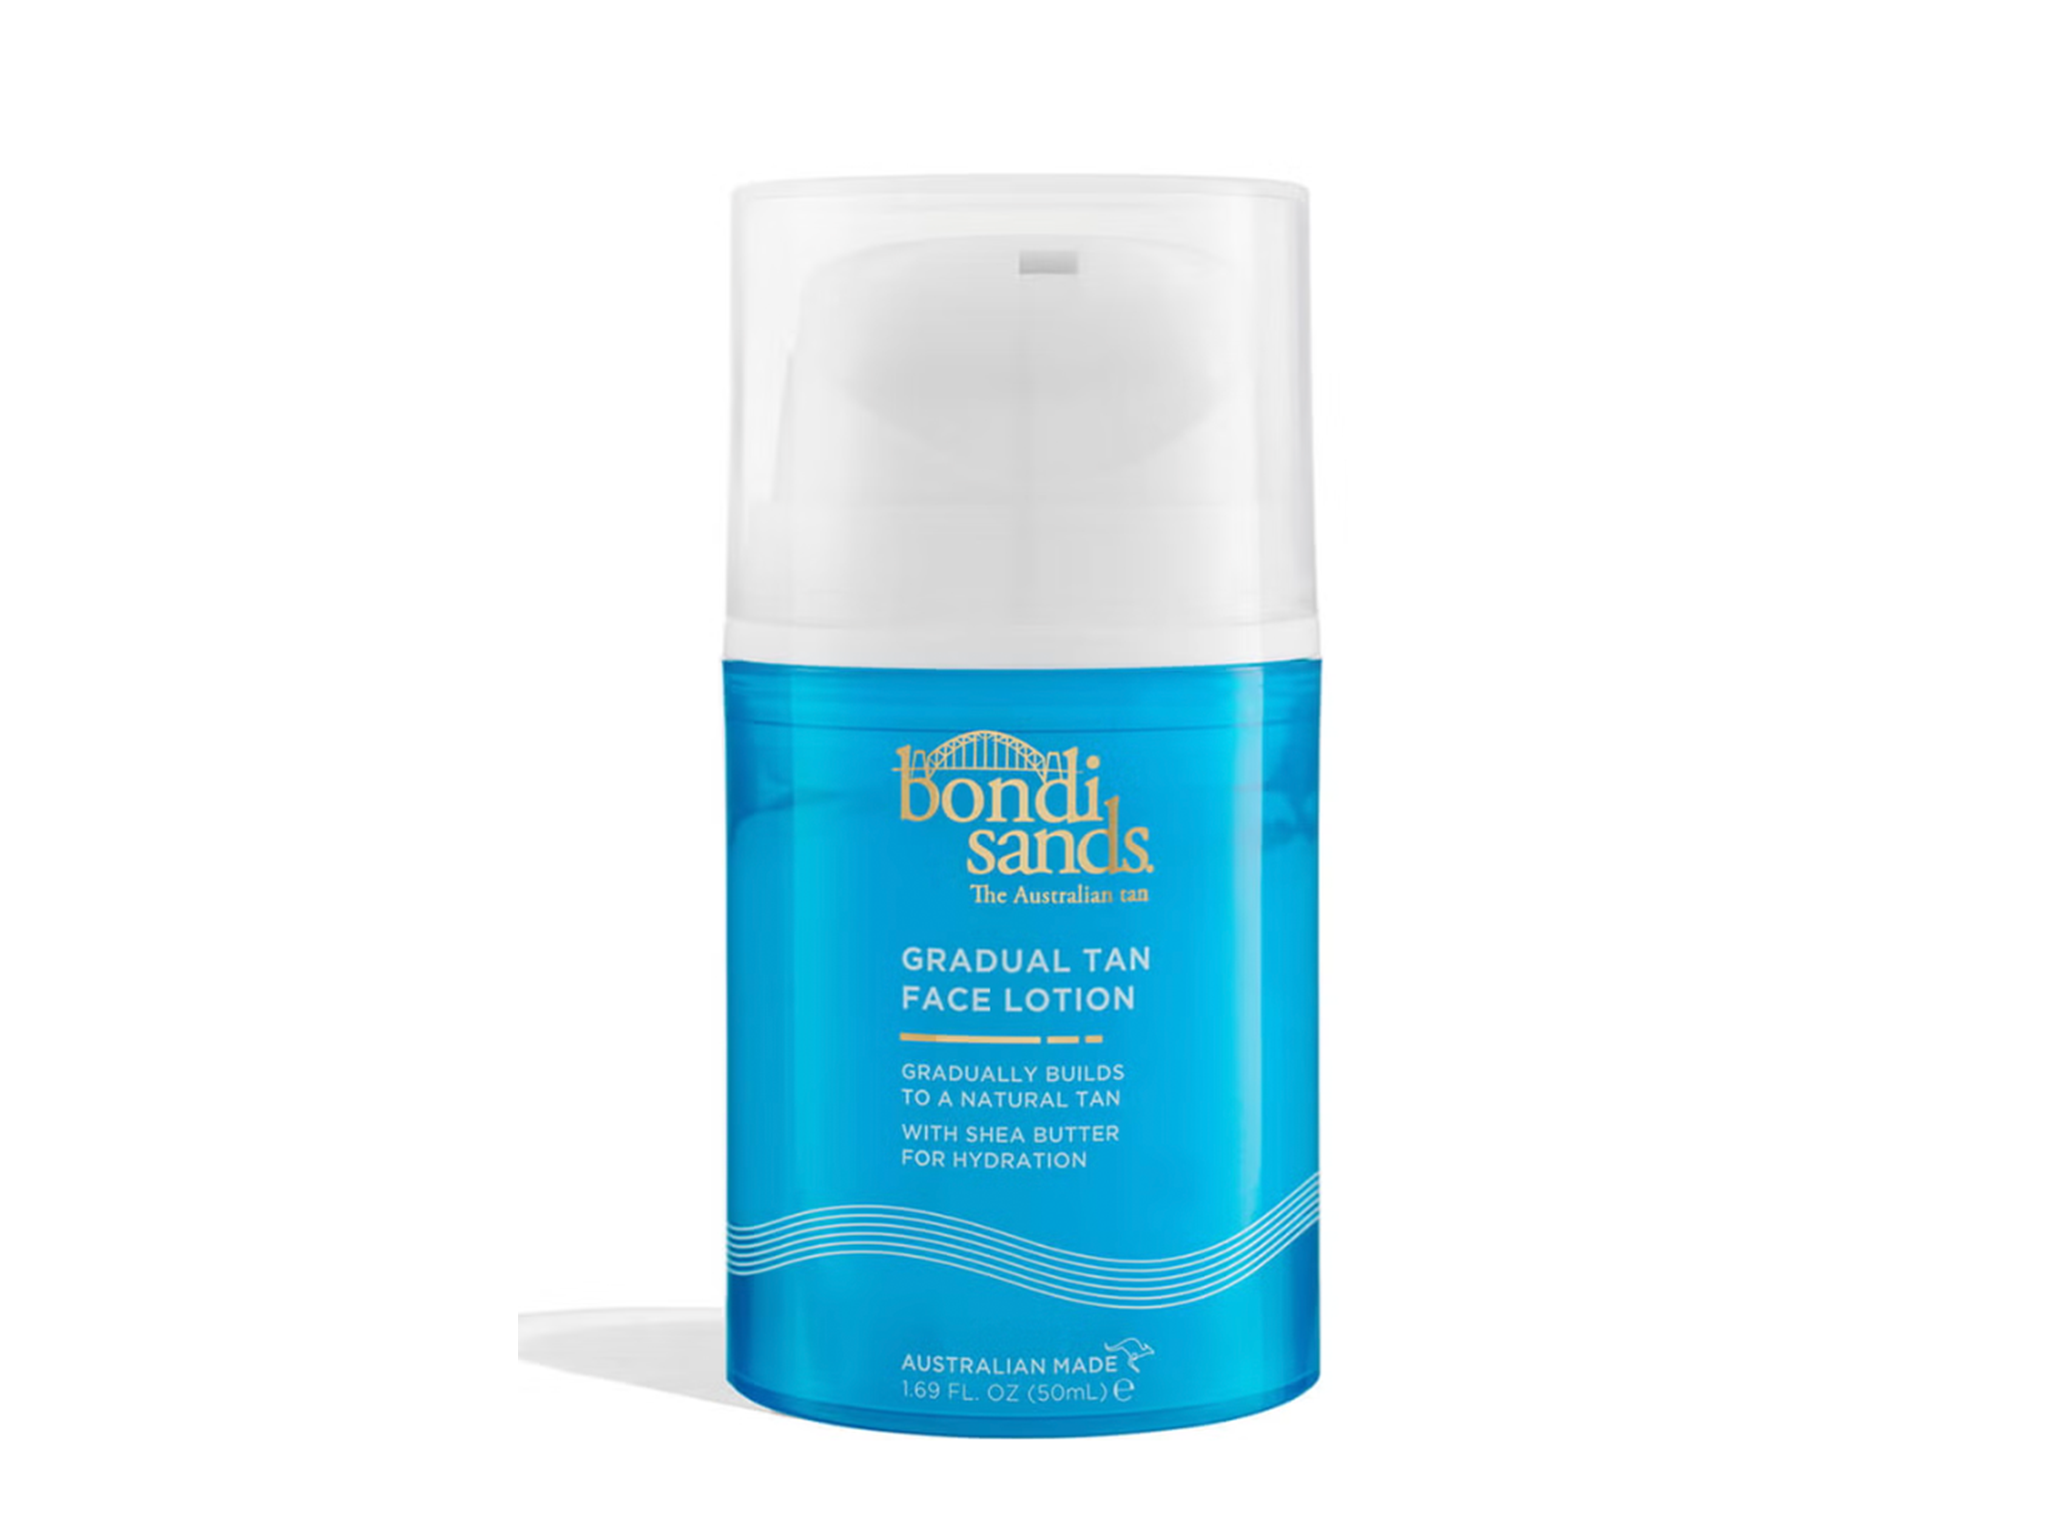 Bondi Sands gradual tanning face lotion